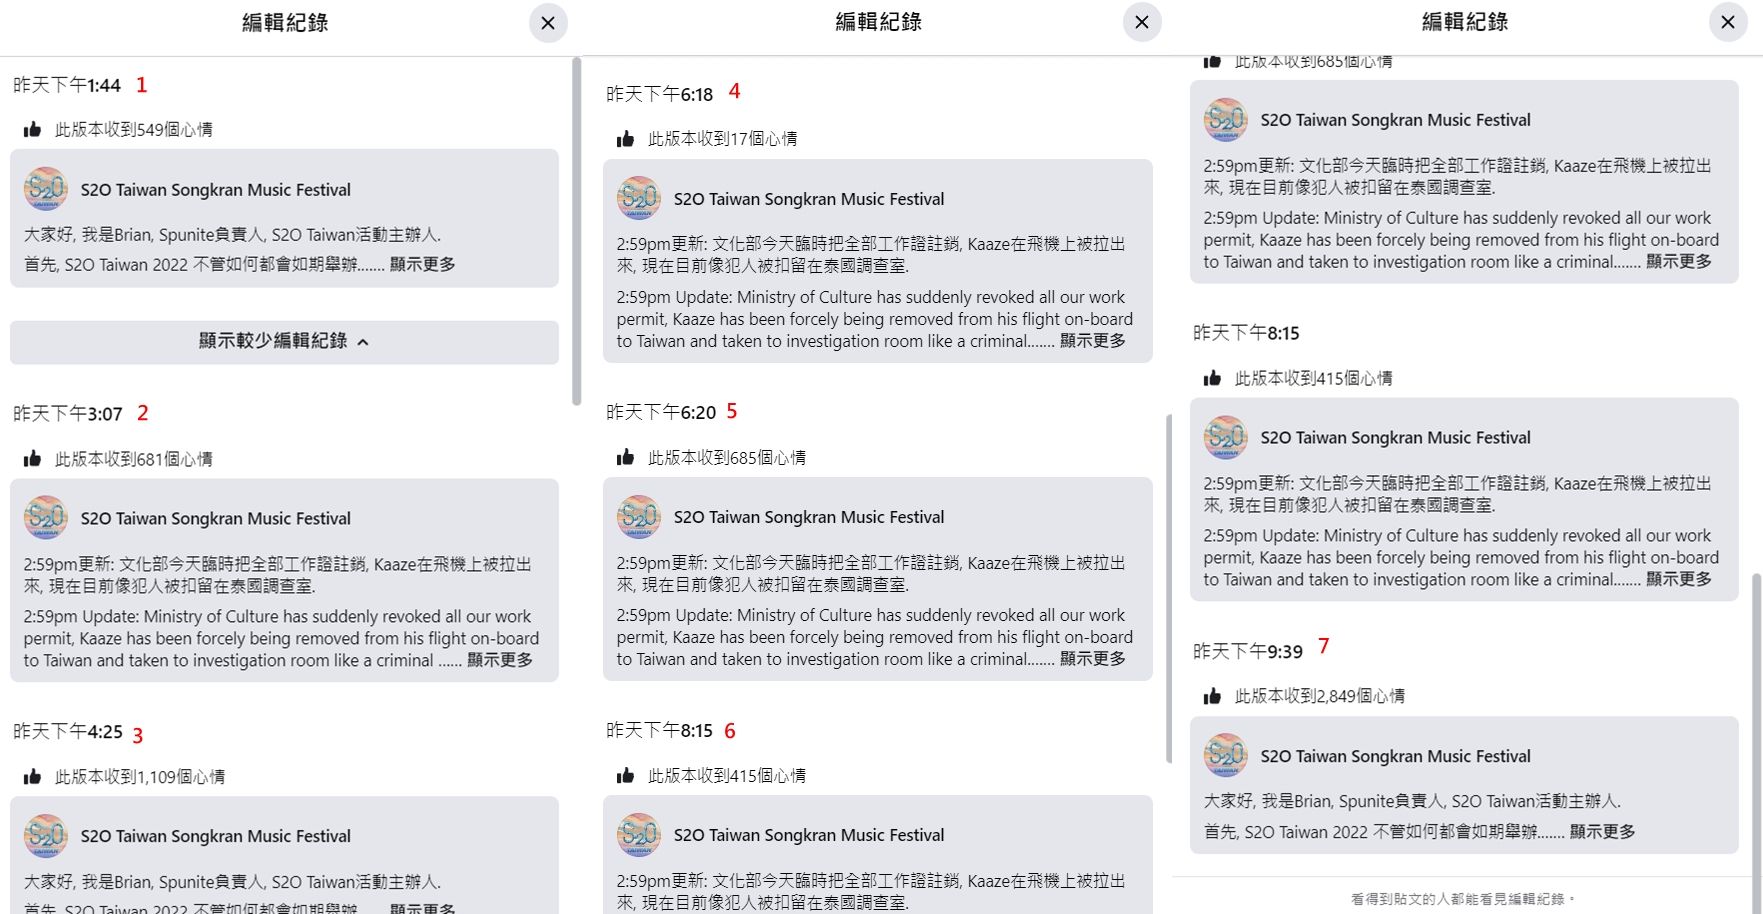 ▲S2O Taiwan潑水音樂祭8月23日宣傳圖中眾星雲集，活動前一天才宣布11組藝人無法出席。（圖／翻攝自FACEBOOK／S2O Taiwan Songkran Music Festival）